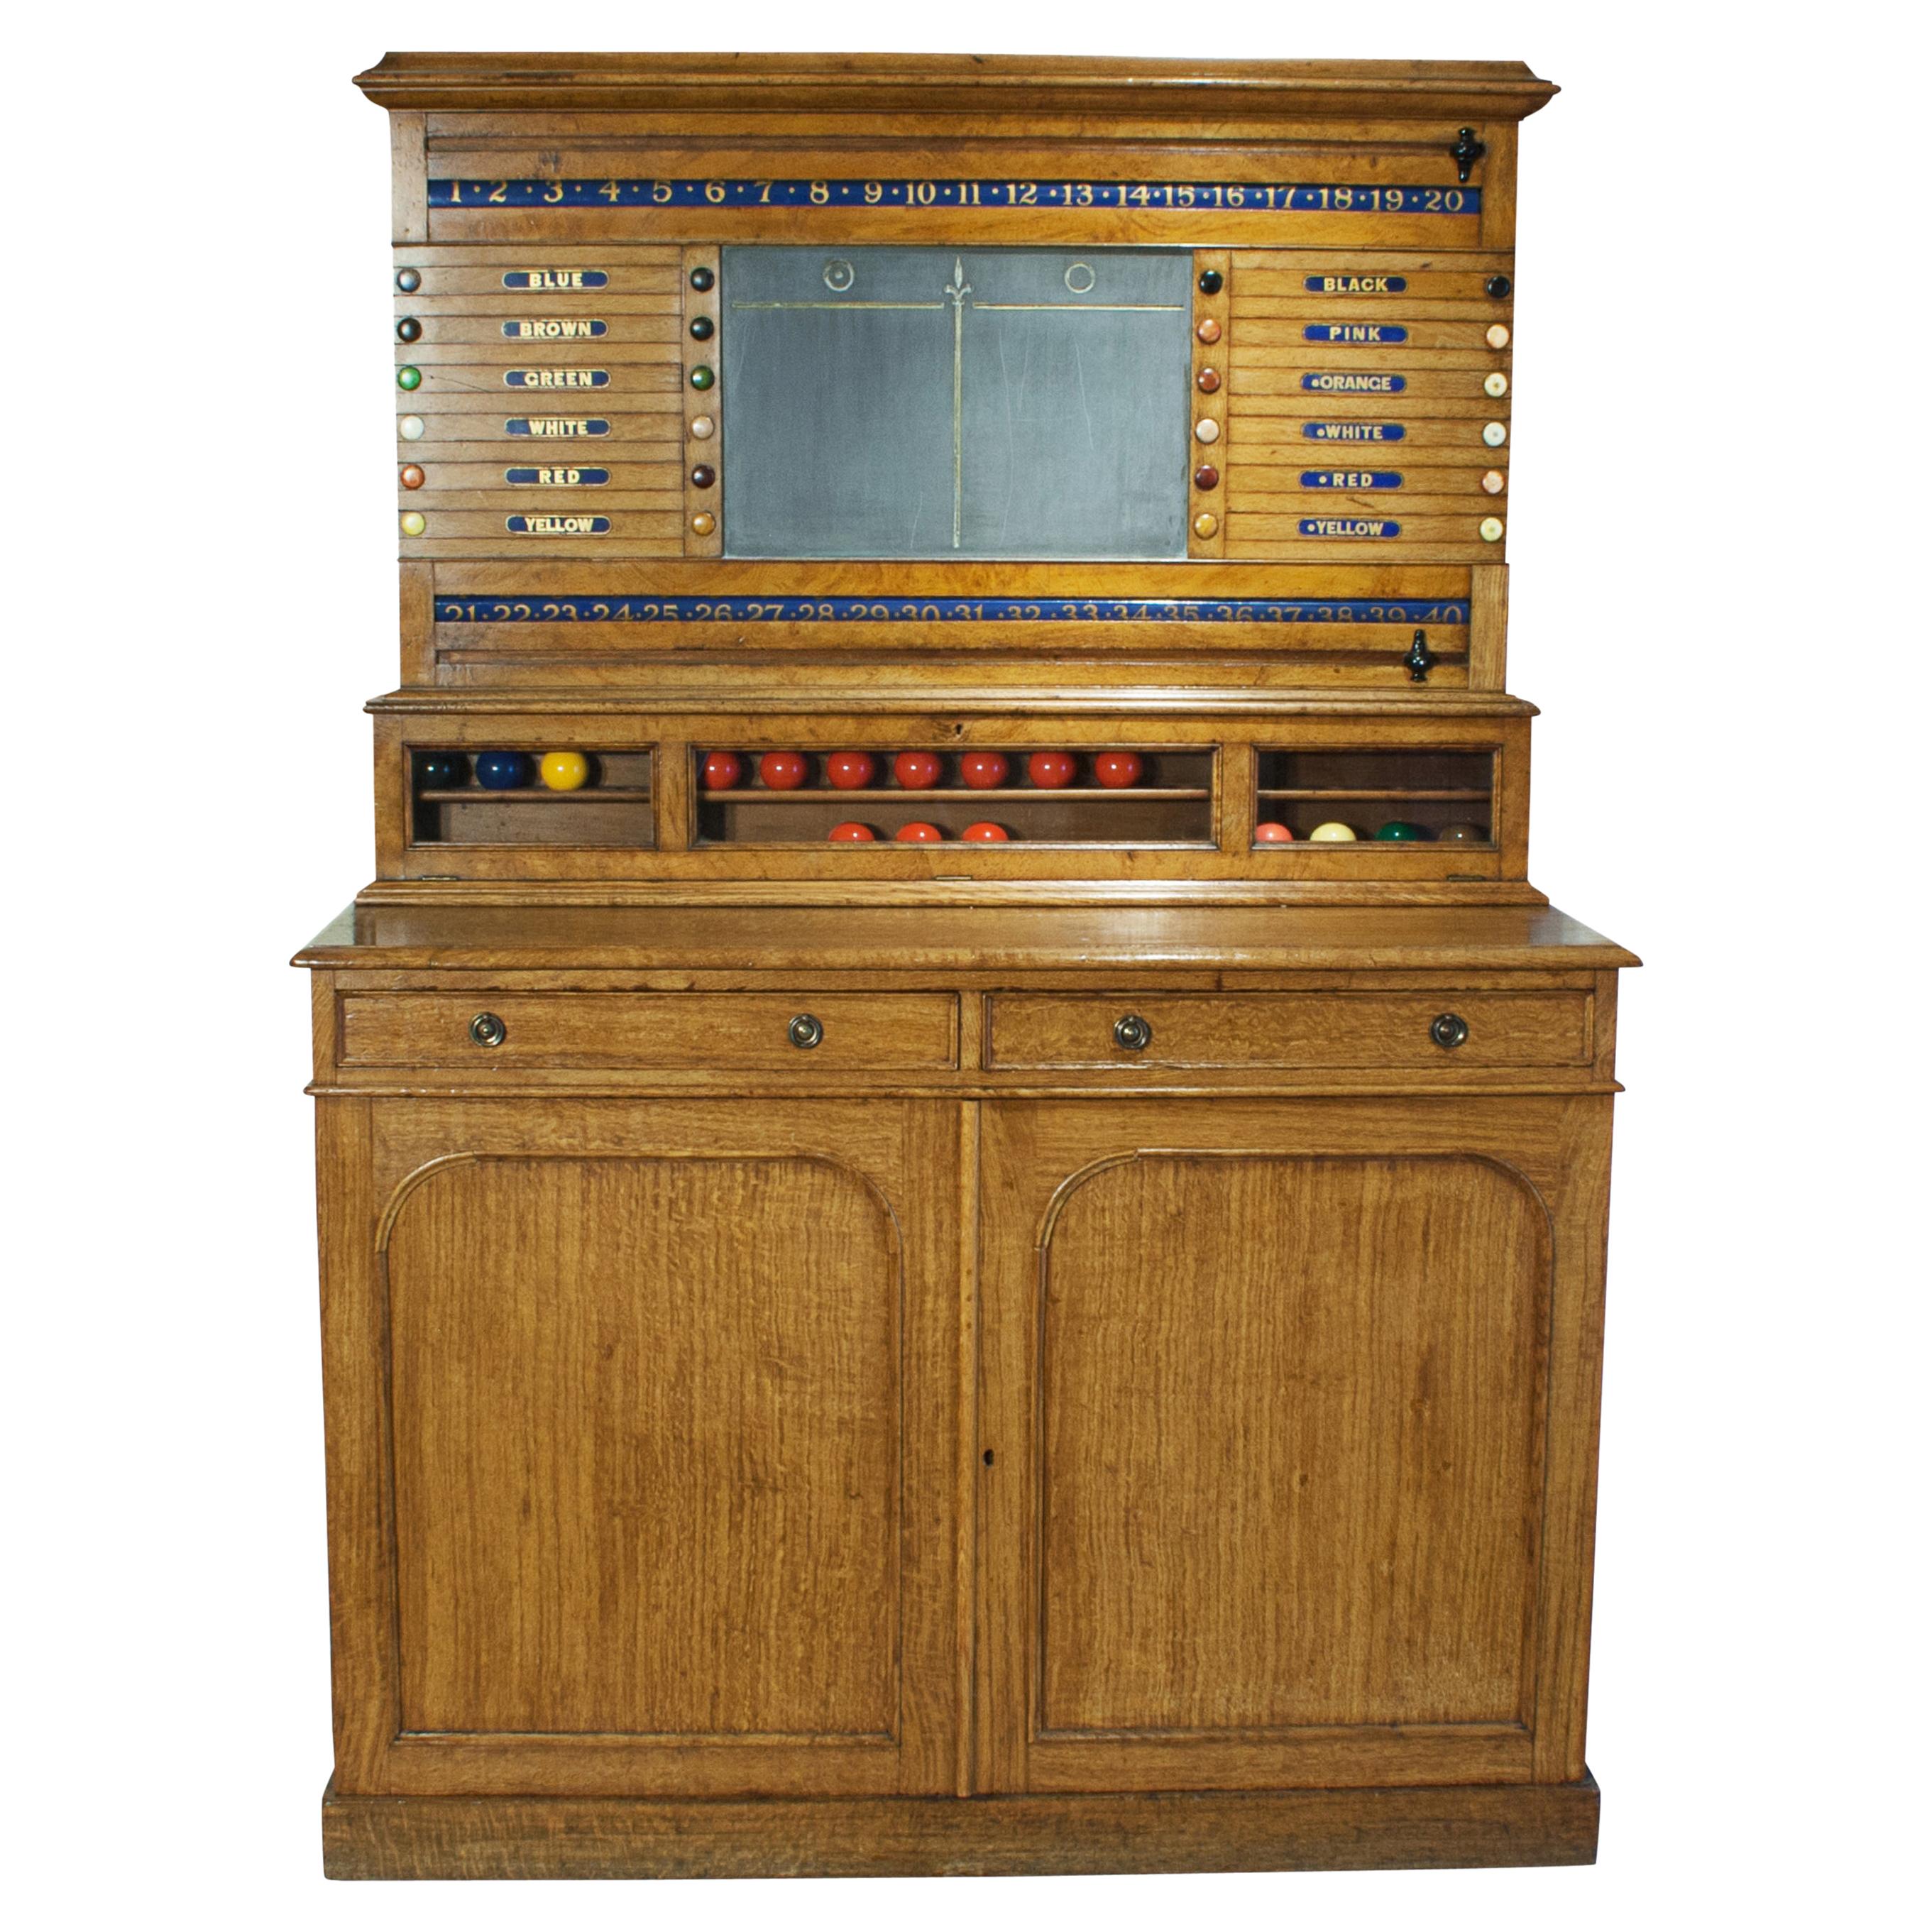 Victorian Oak Billiard, Lifepool Scoreboard with Cabinet